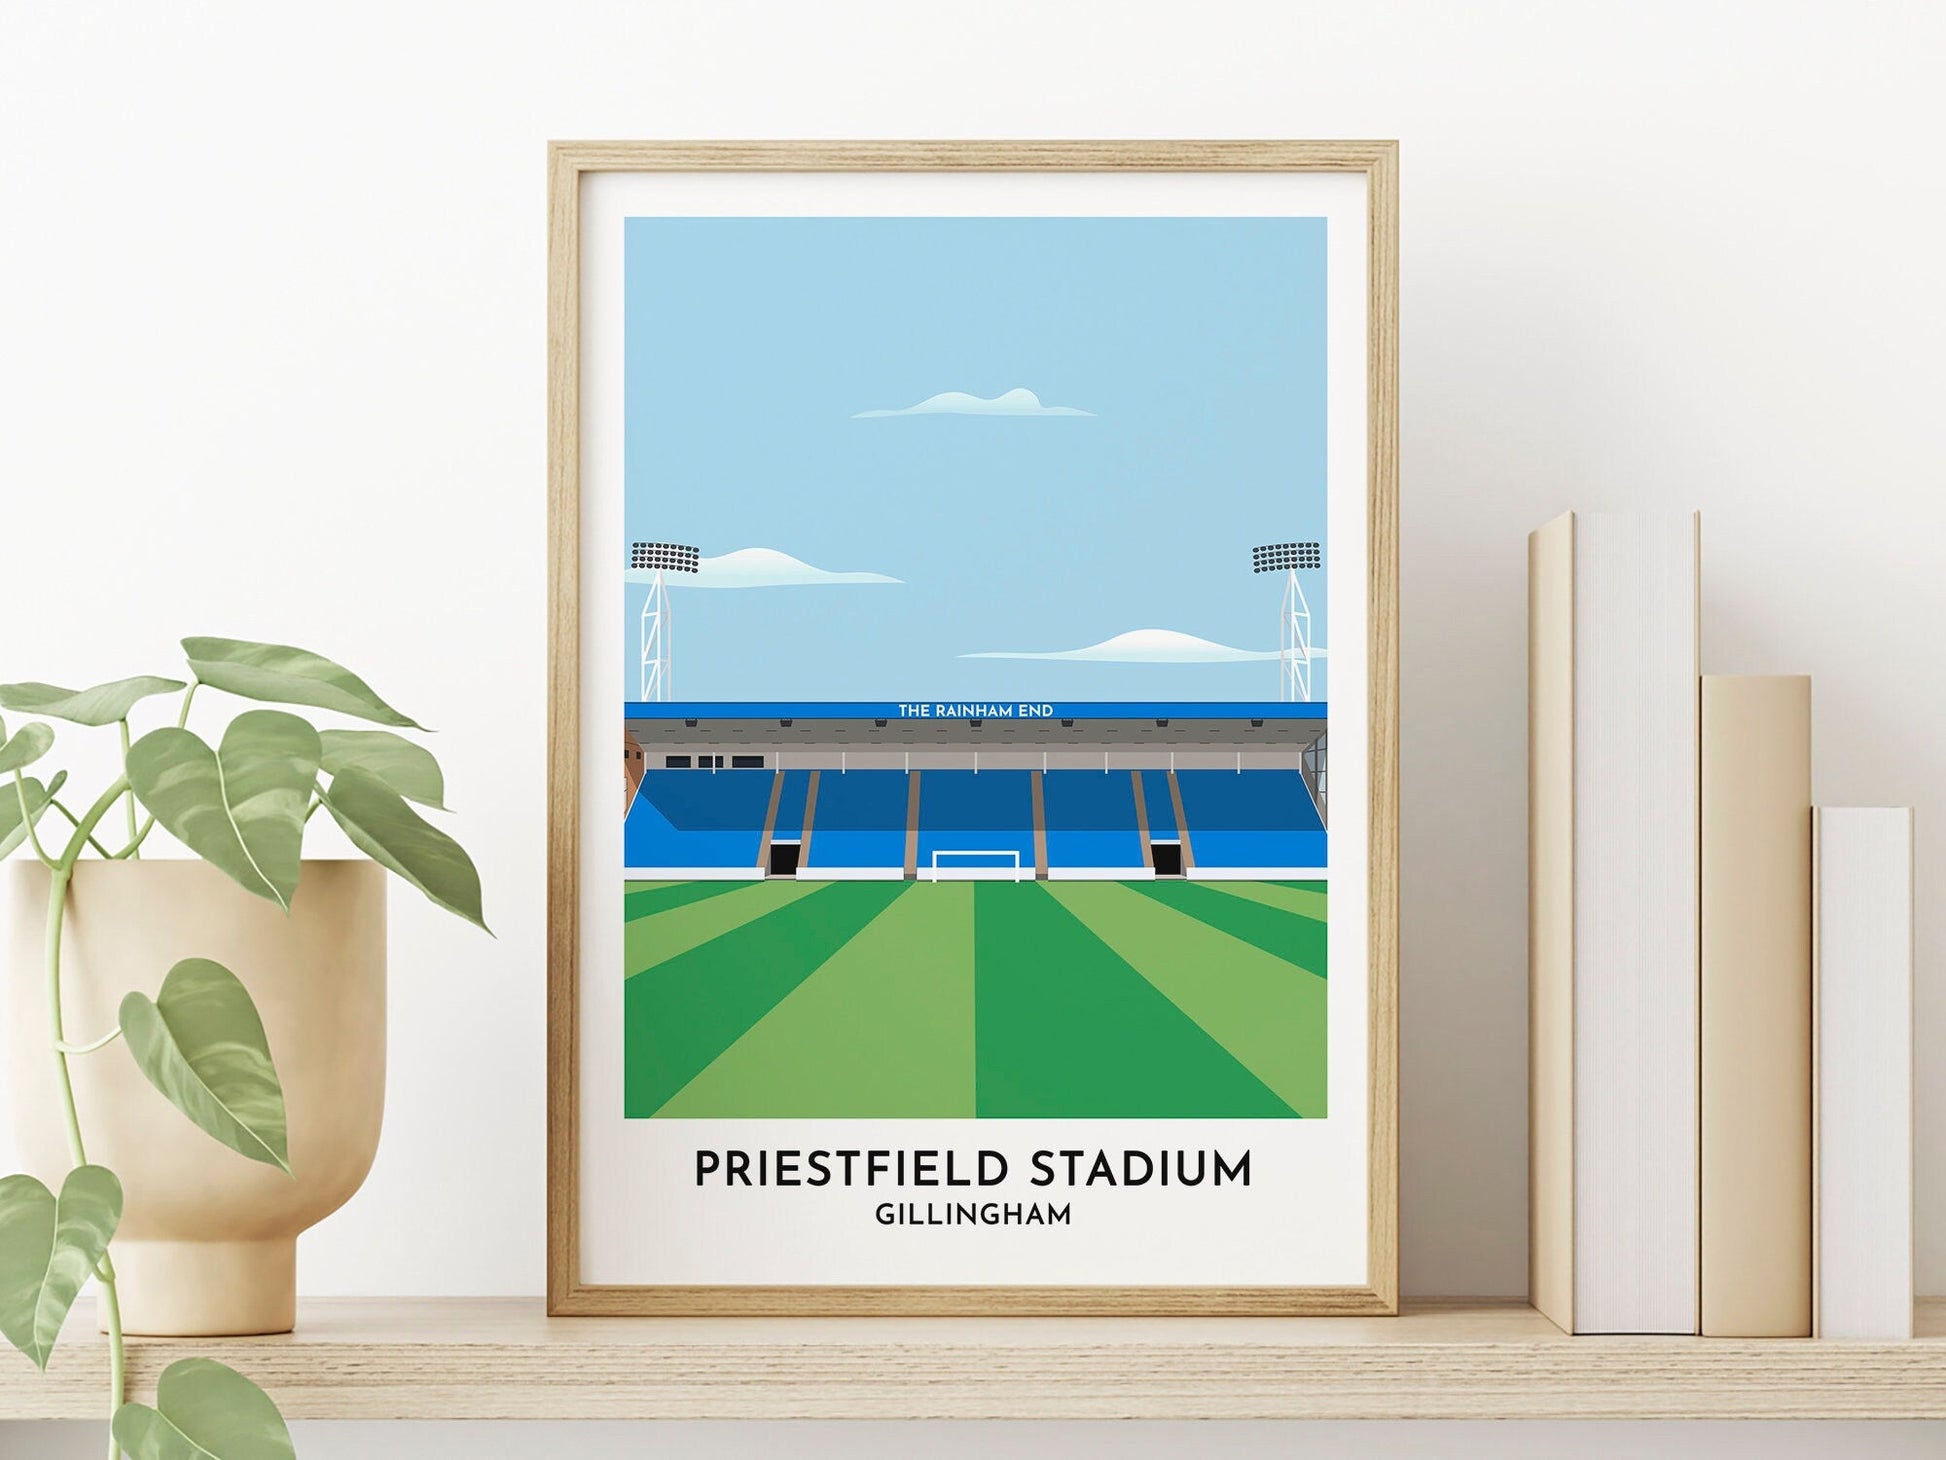 Gillingham Football Art Gift - Priestfield Stadium Illustrated Print - Kent Artwork - Anniversary Gifts for Him Her - Turf Football Art